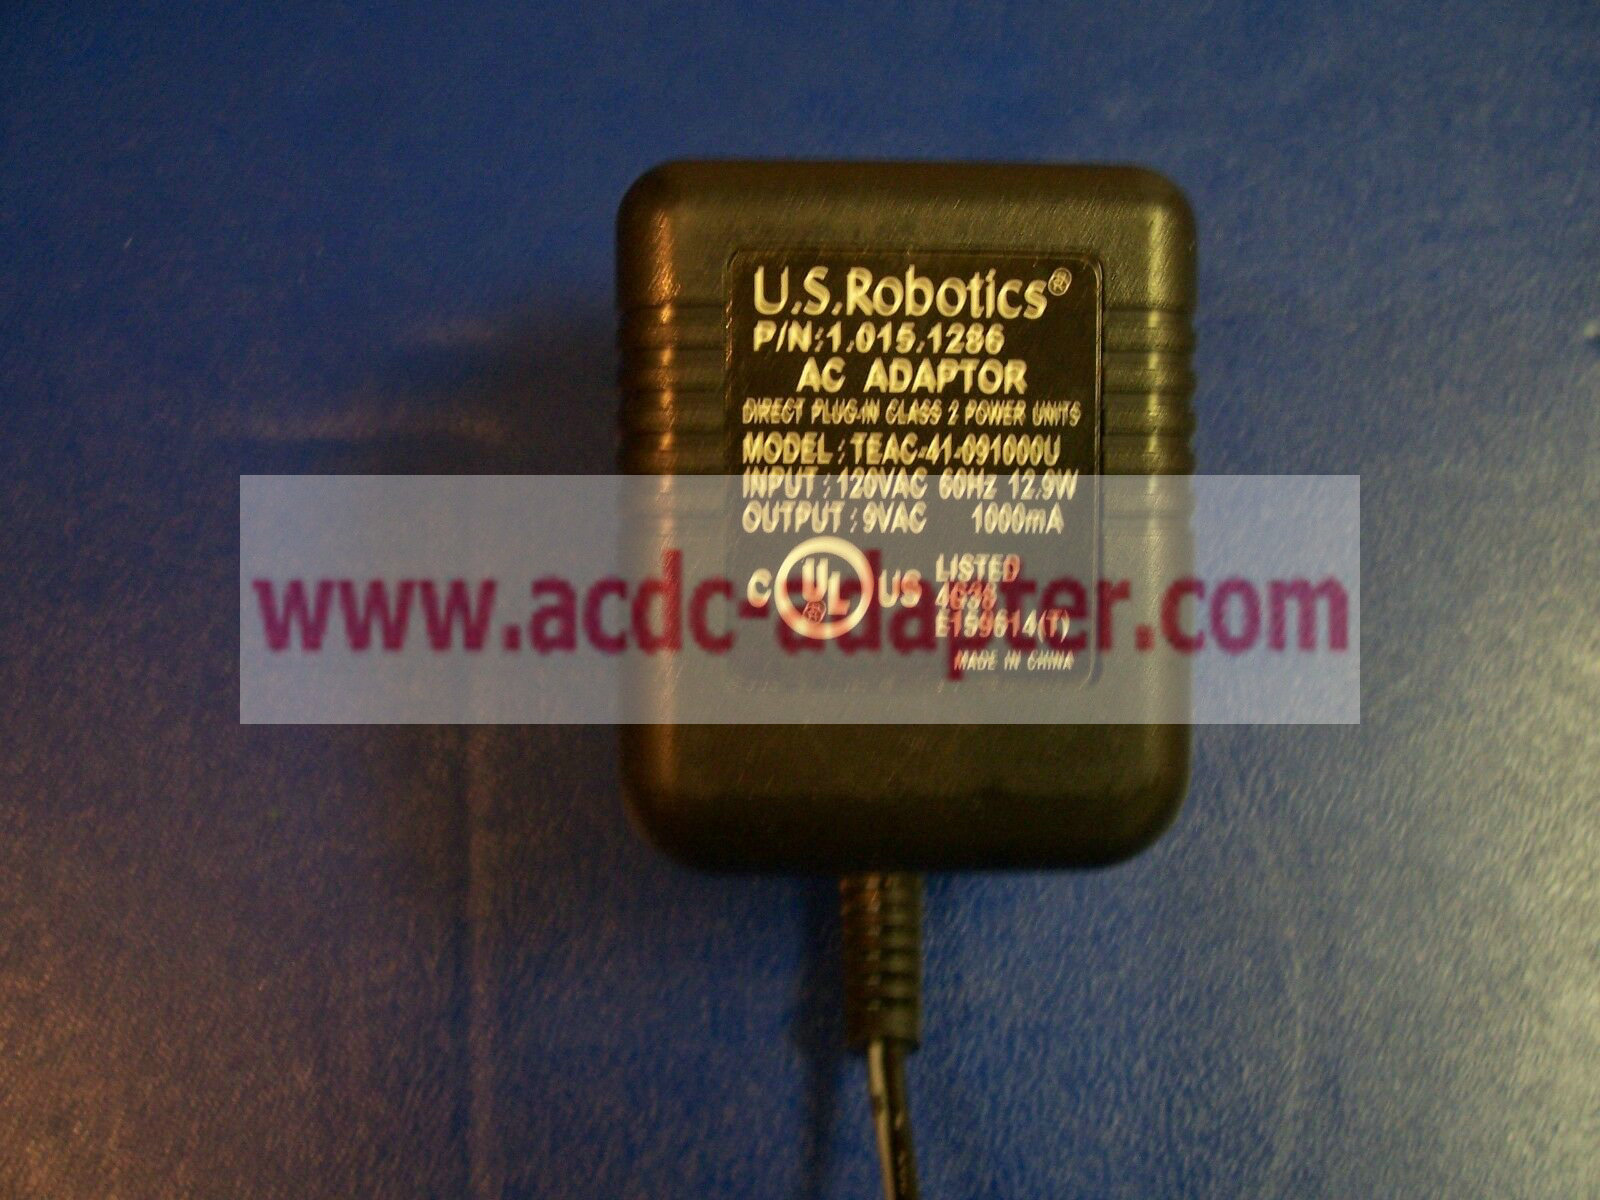 Genuine 9VAC 1000mA 1A 1.015.1286 US Robotics TEAC-41-091000U AC Power Adapter